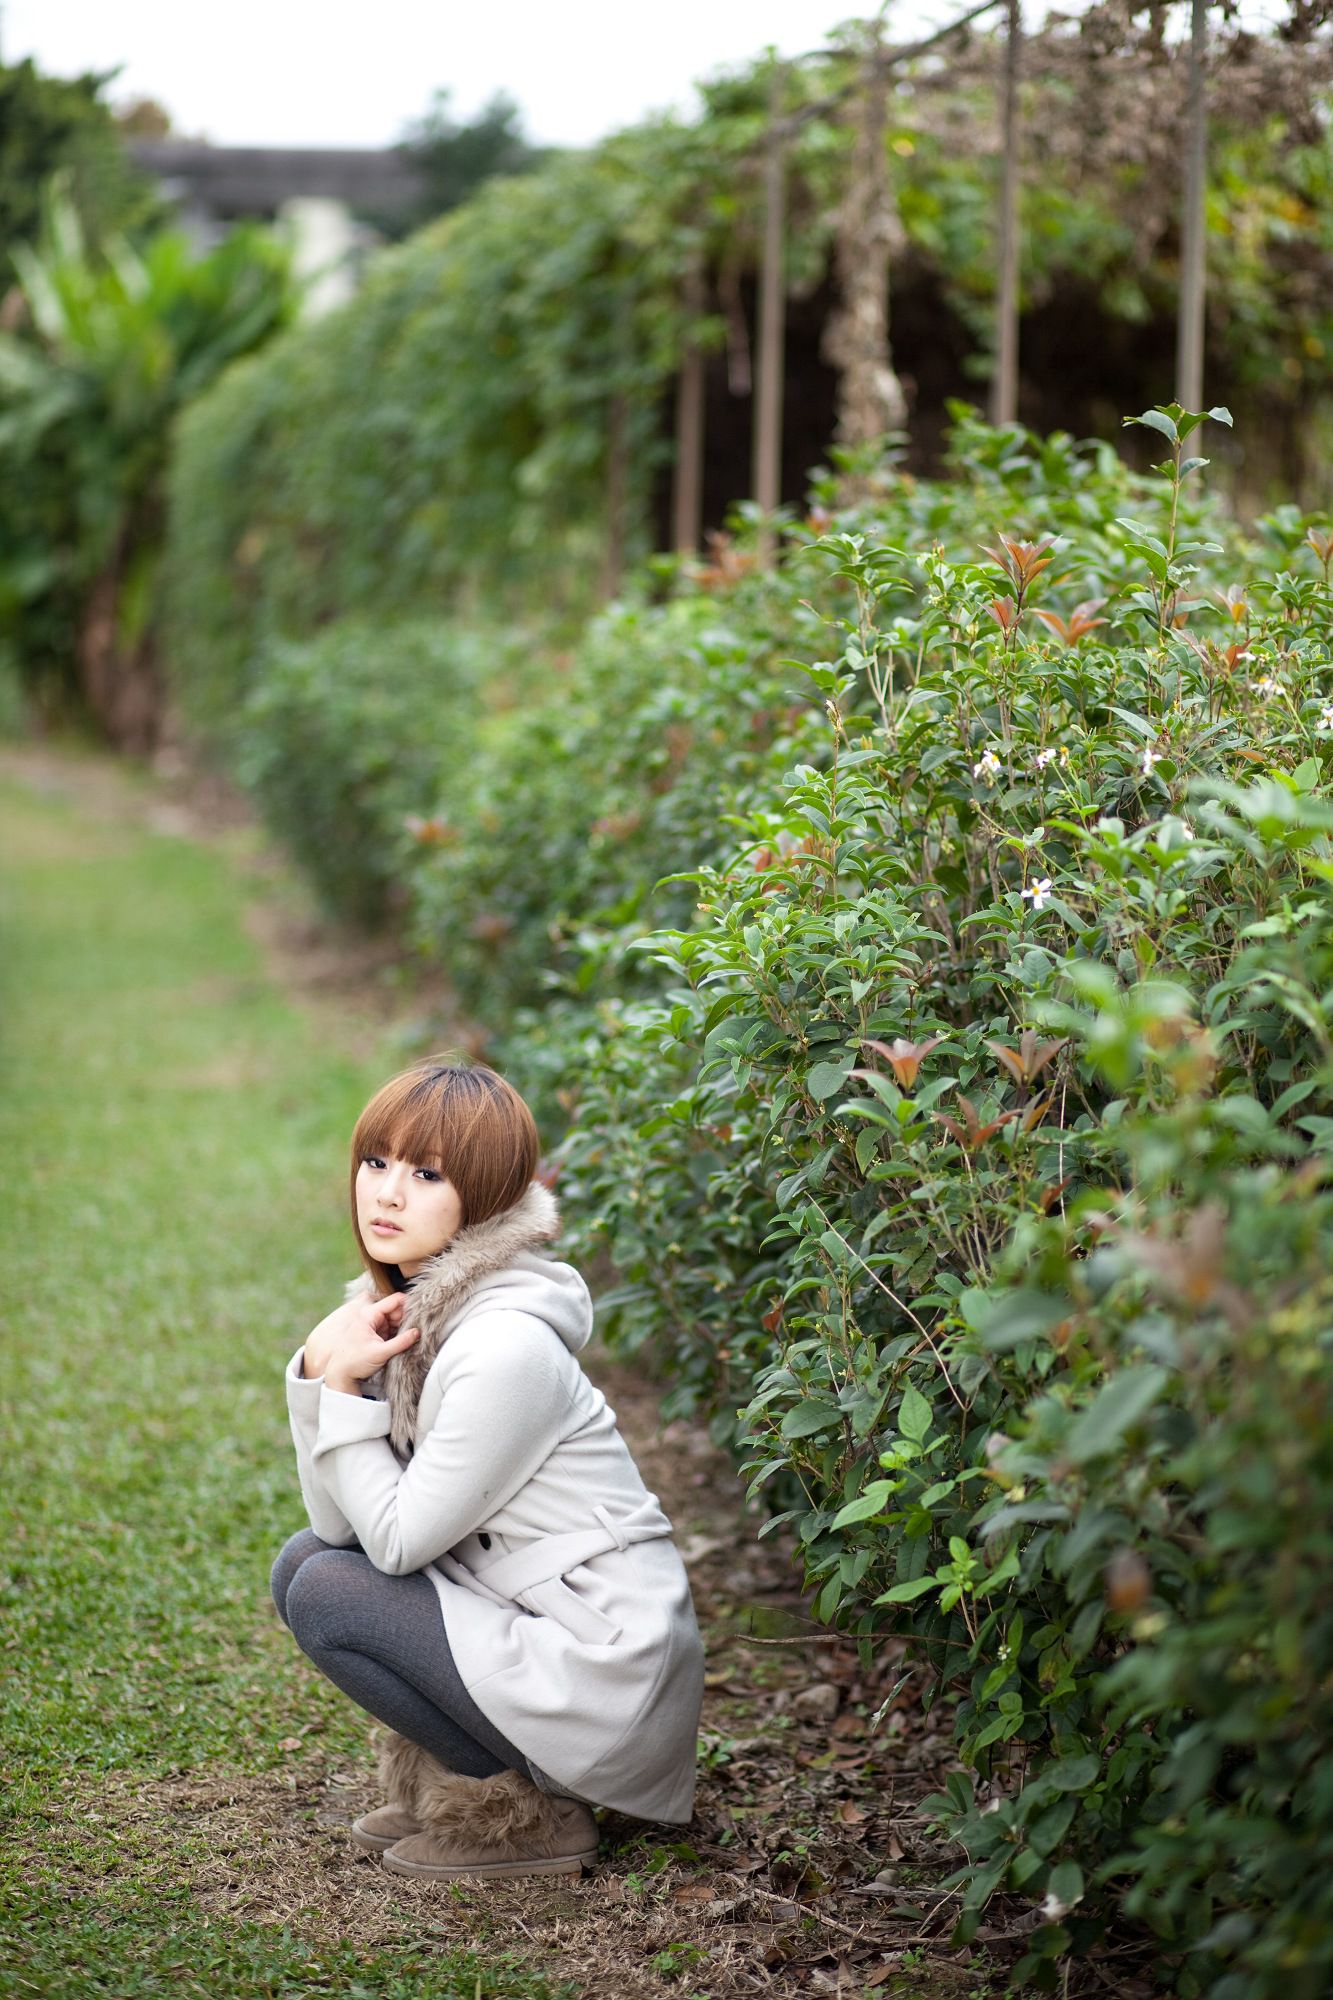 Taiwan big goddess fruit mm “Taiwan’s external shoot” 7th photo set